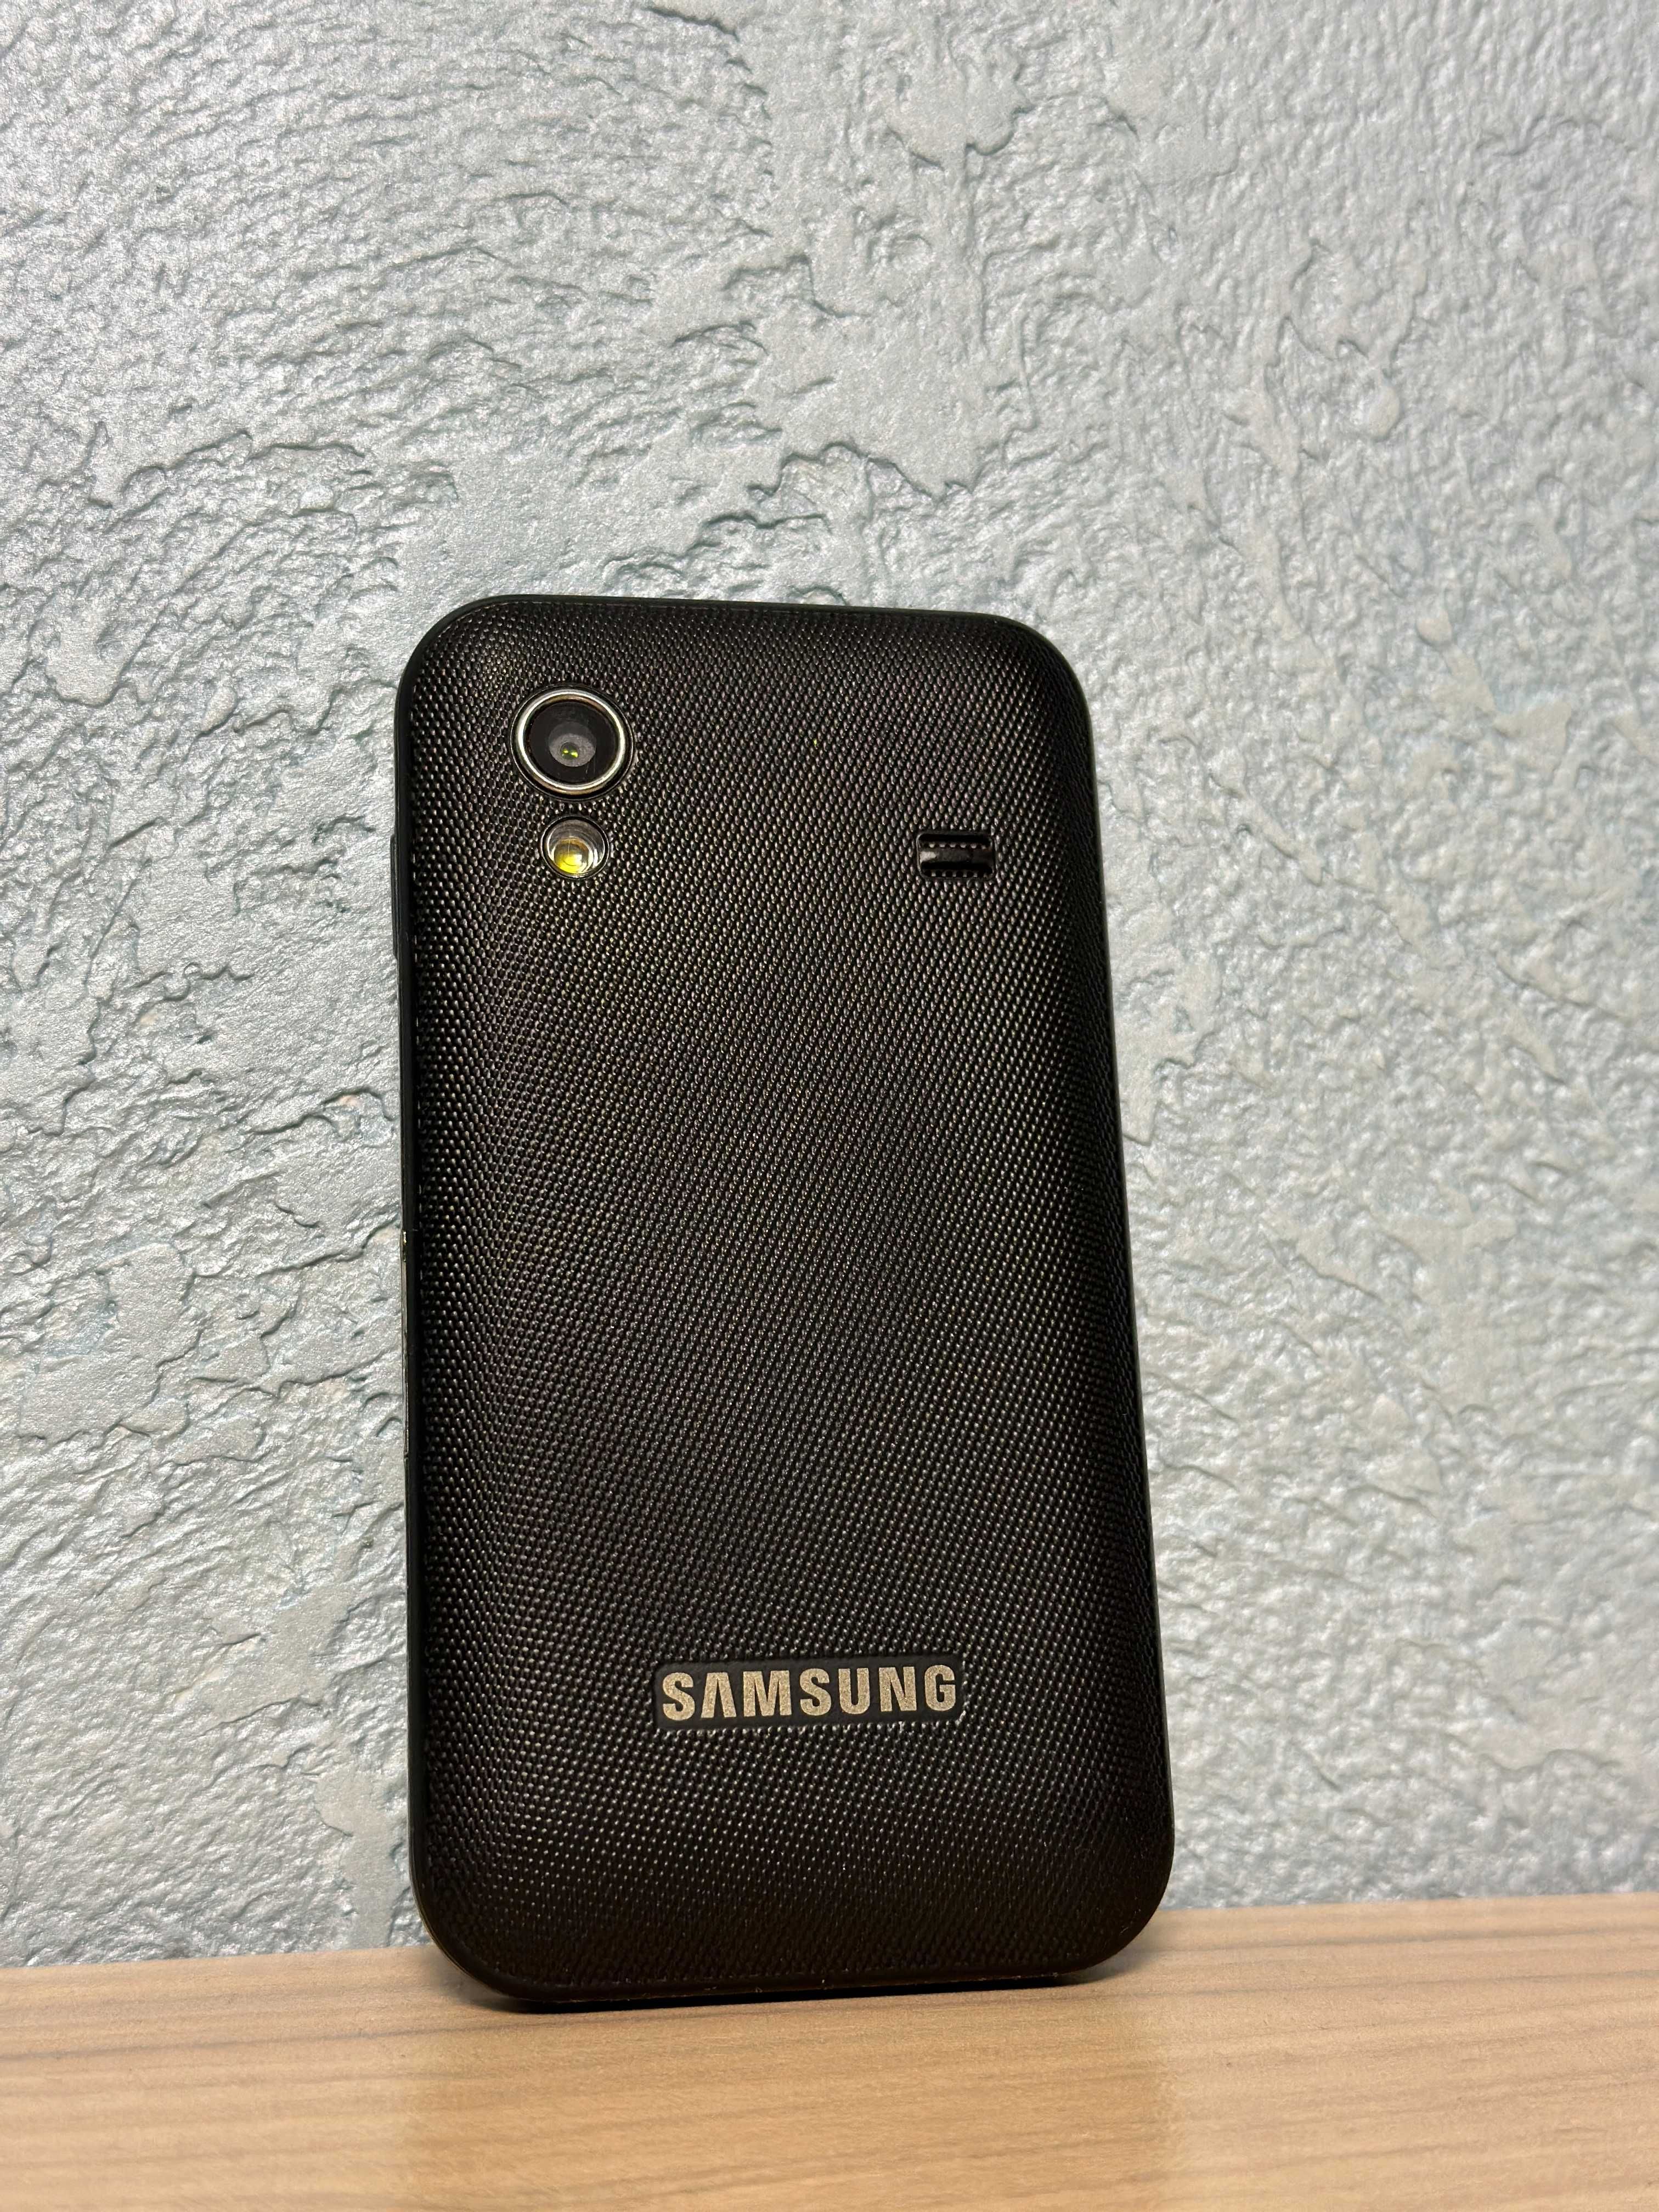 Samsung Galaxy Ace (S5830i) | Android | У робочому стані